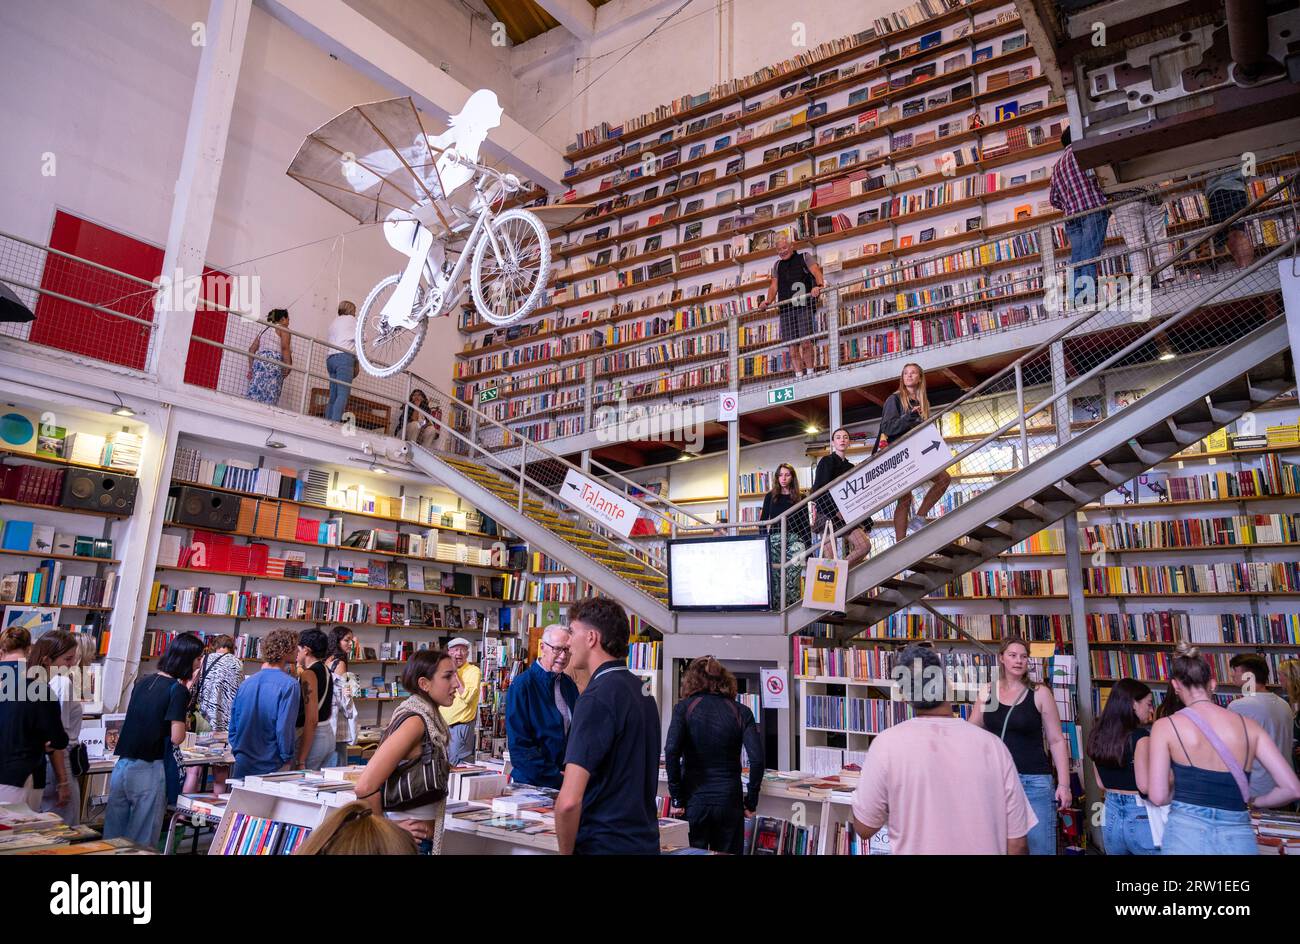 Libreria ler Devagar presso la LX Factory di Lisbona Foto Stock